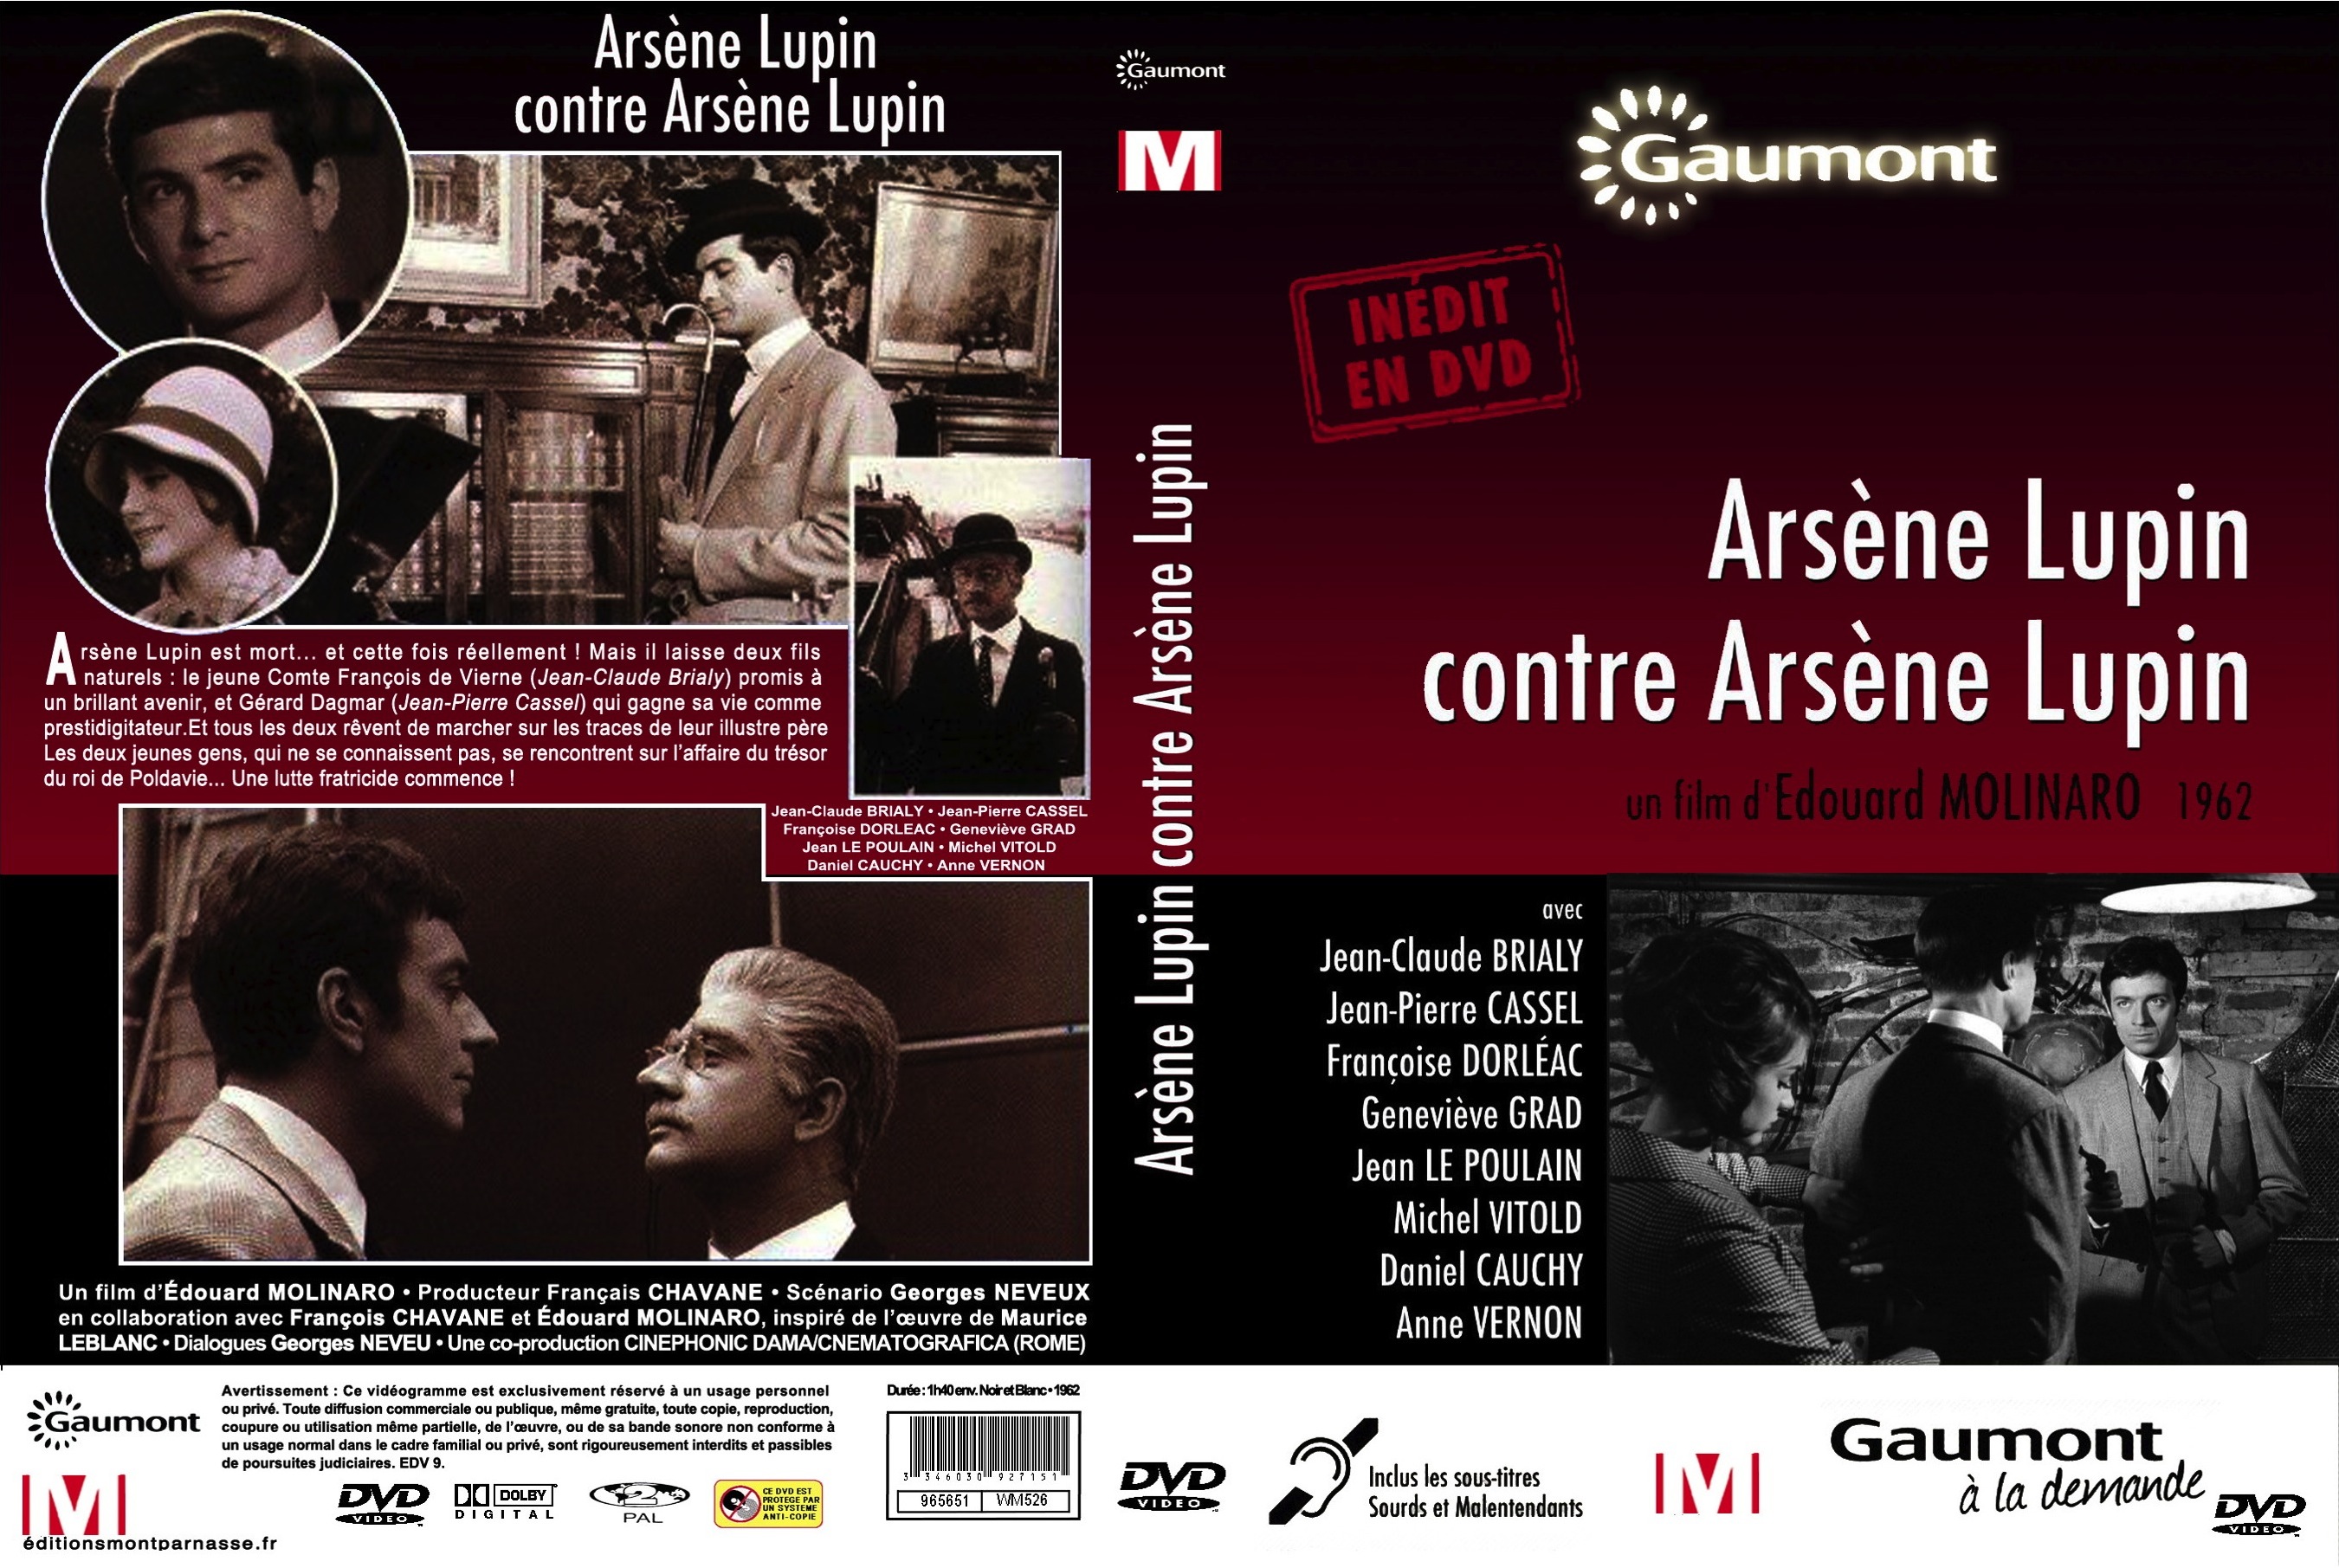 Jaquette DVD Arsene Lupin contre Arsene Lupin